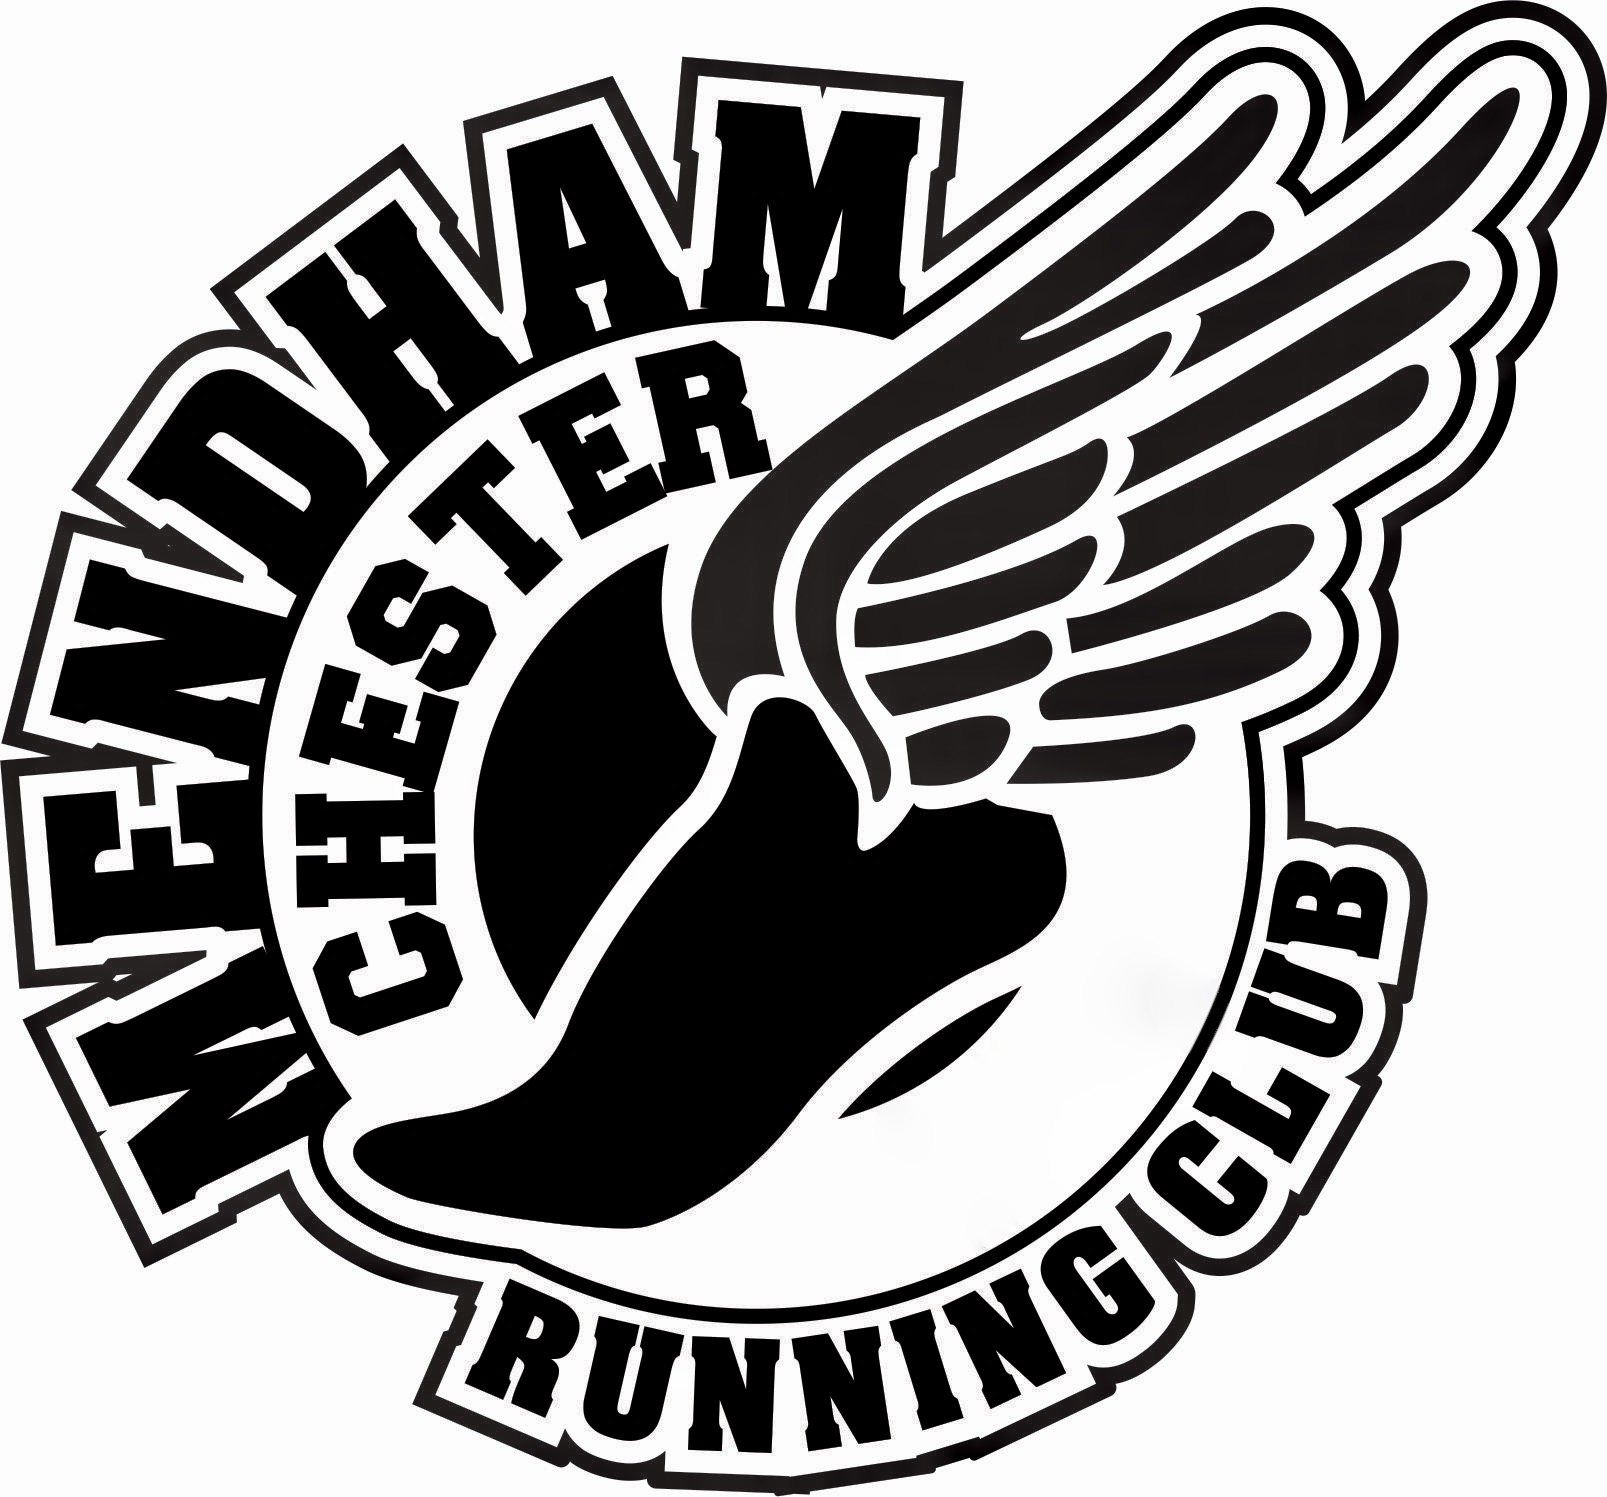 Mendham-Chester Running Club